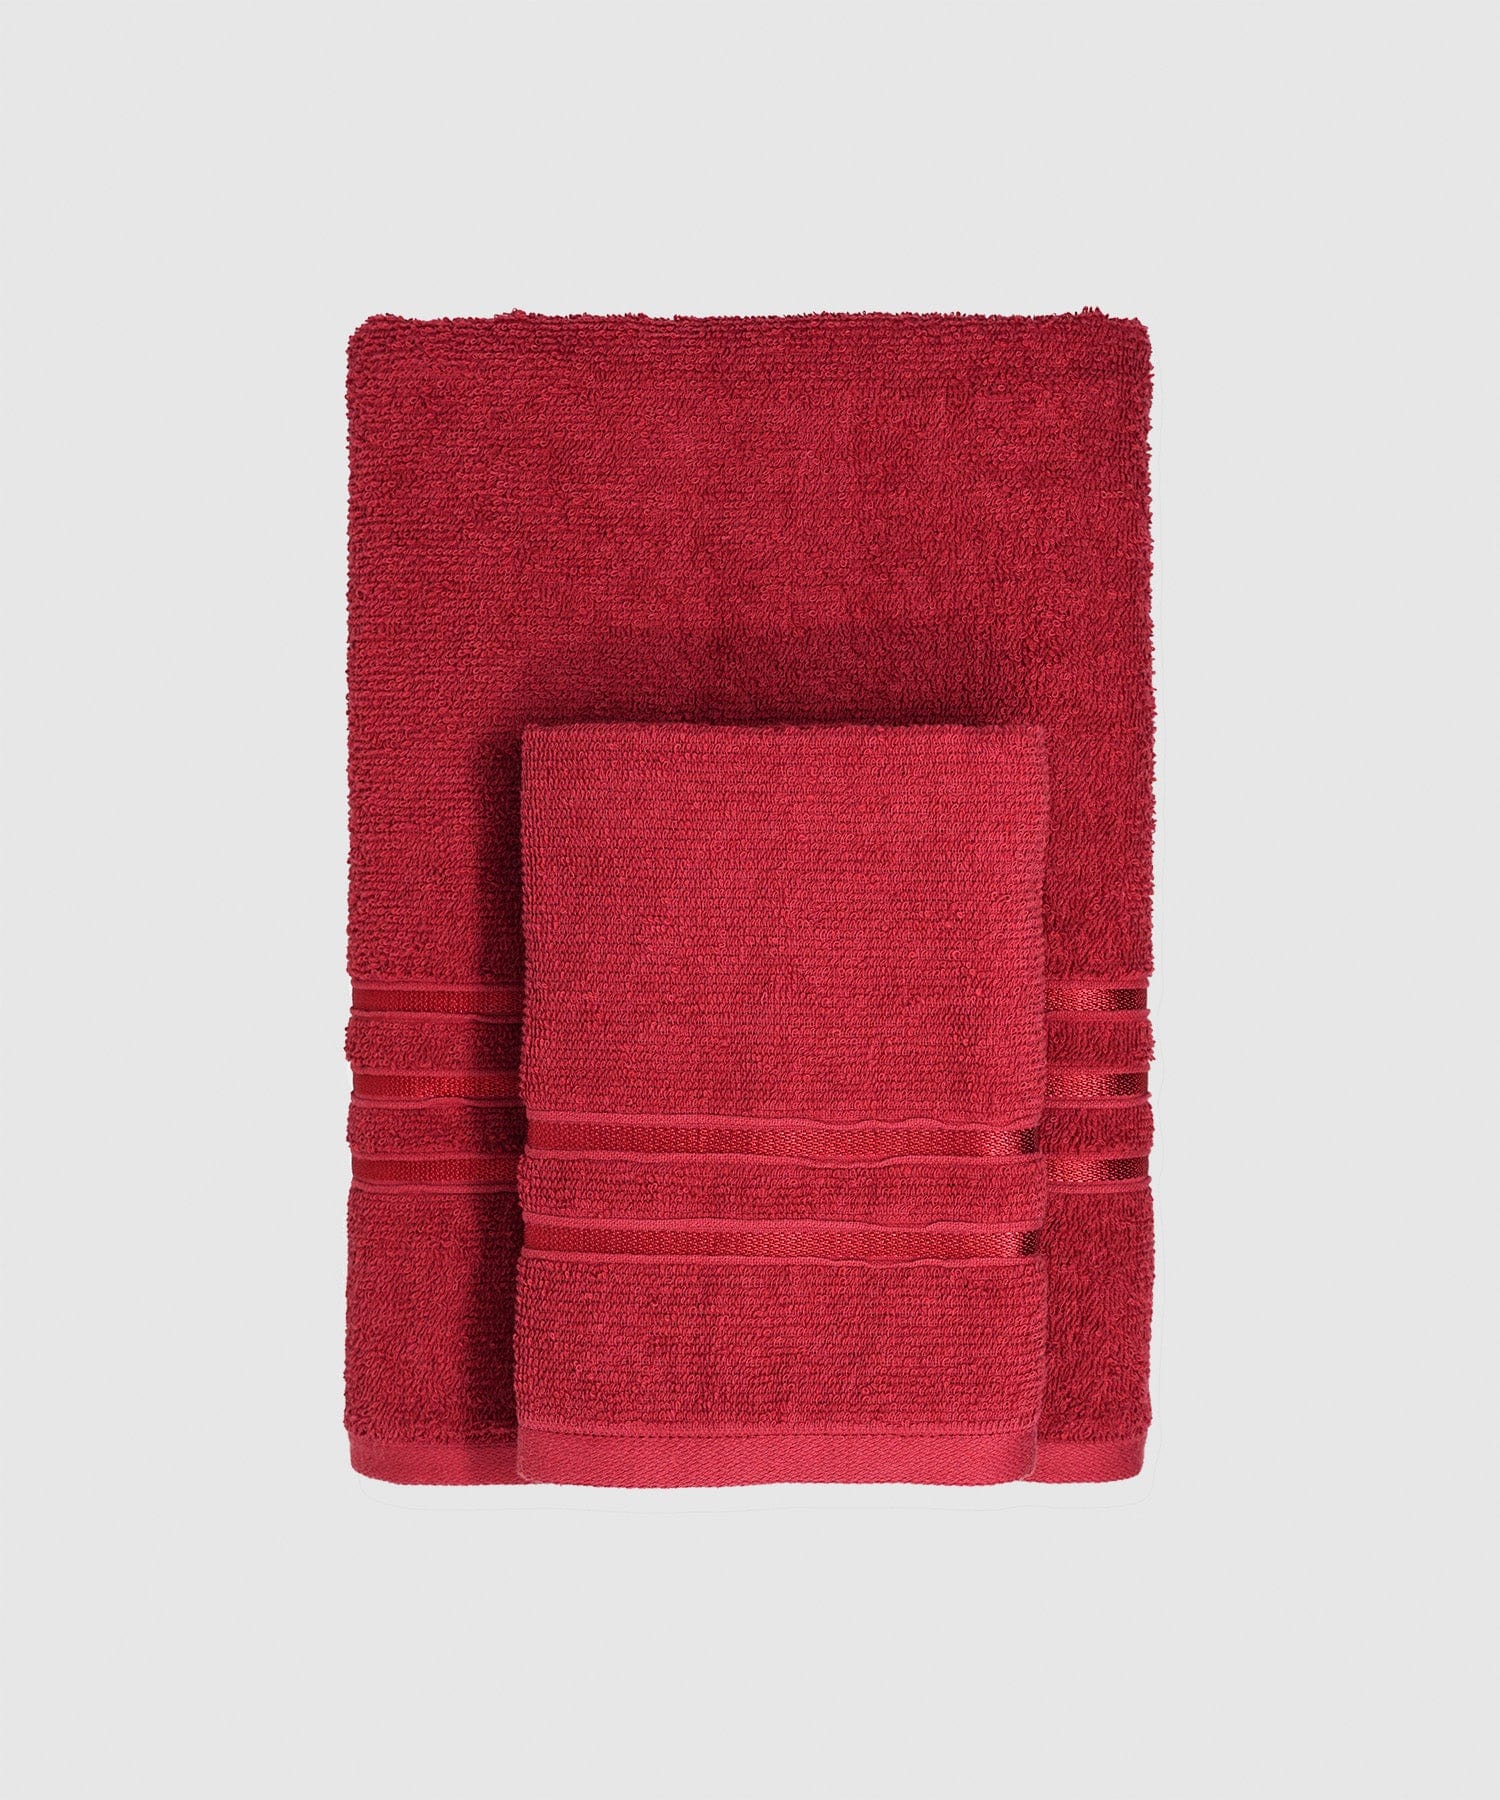 3Pc Towel Set ₹525/-